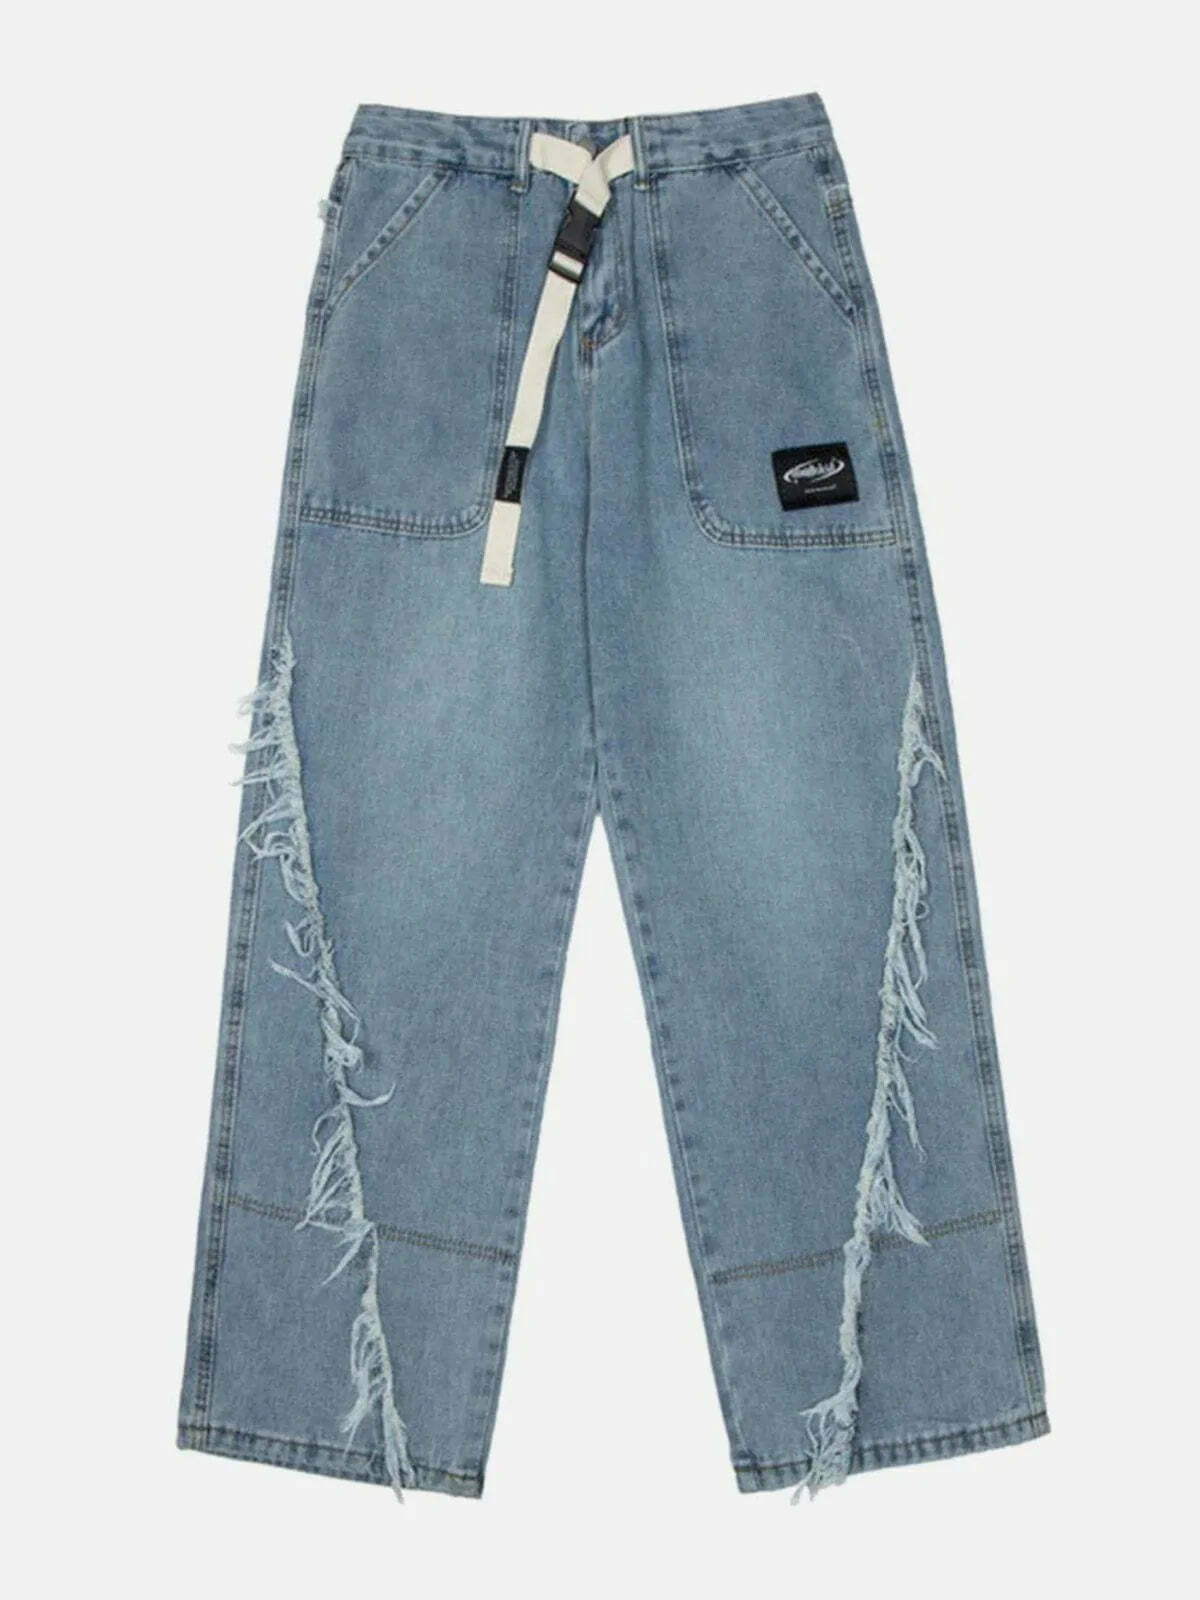 patchwork design jeans edgy & retro streetwear 8605